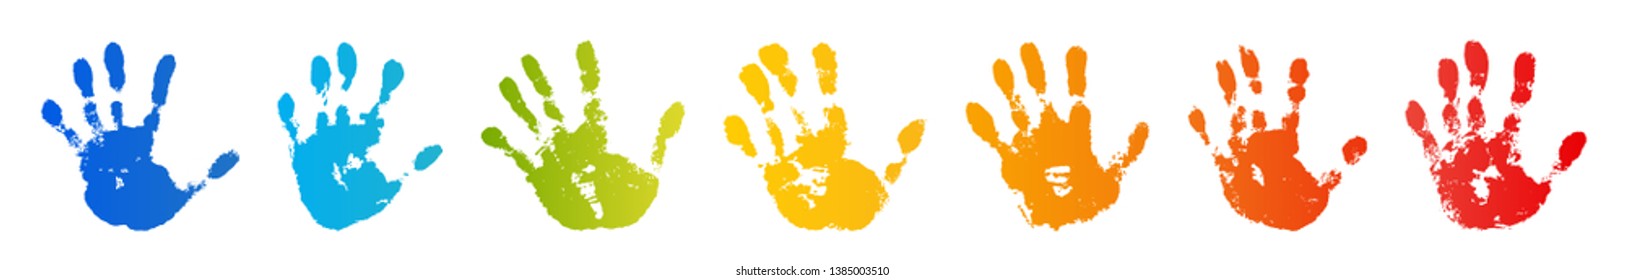 Image result for kids hand print"